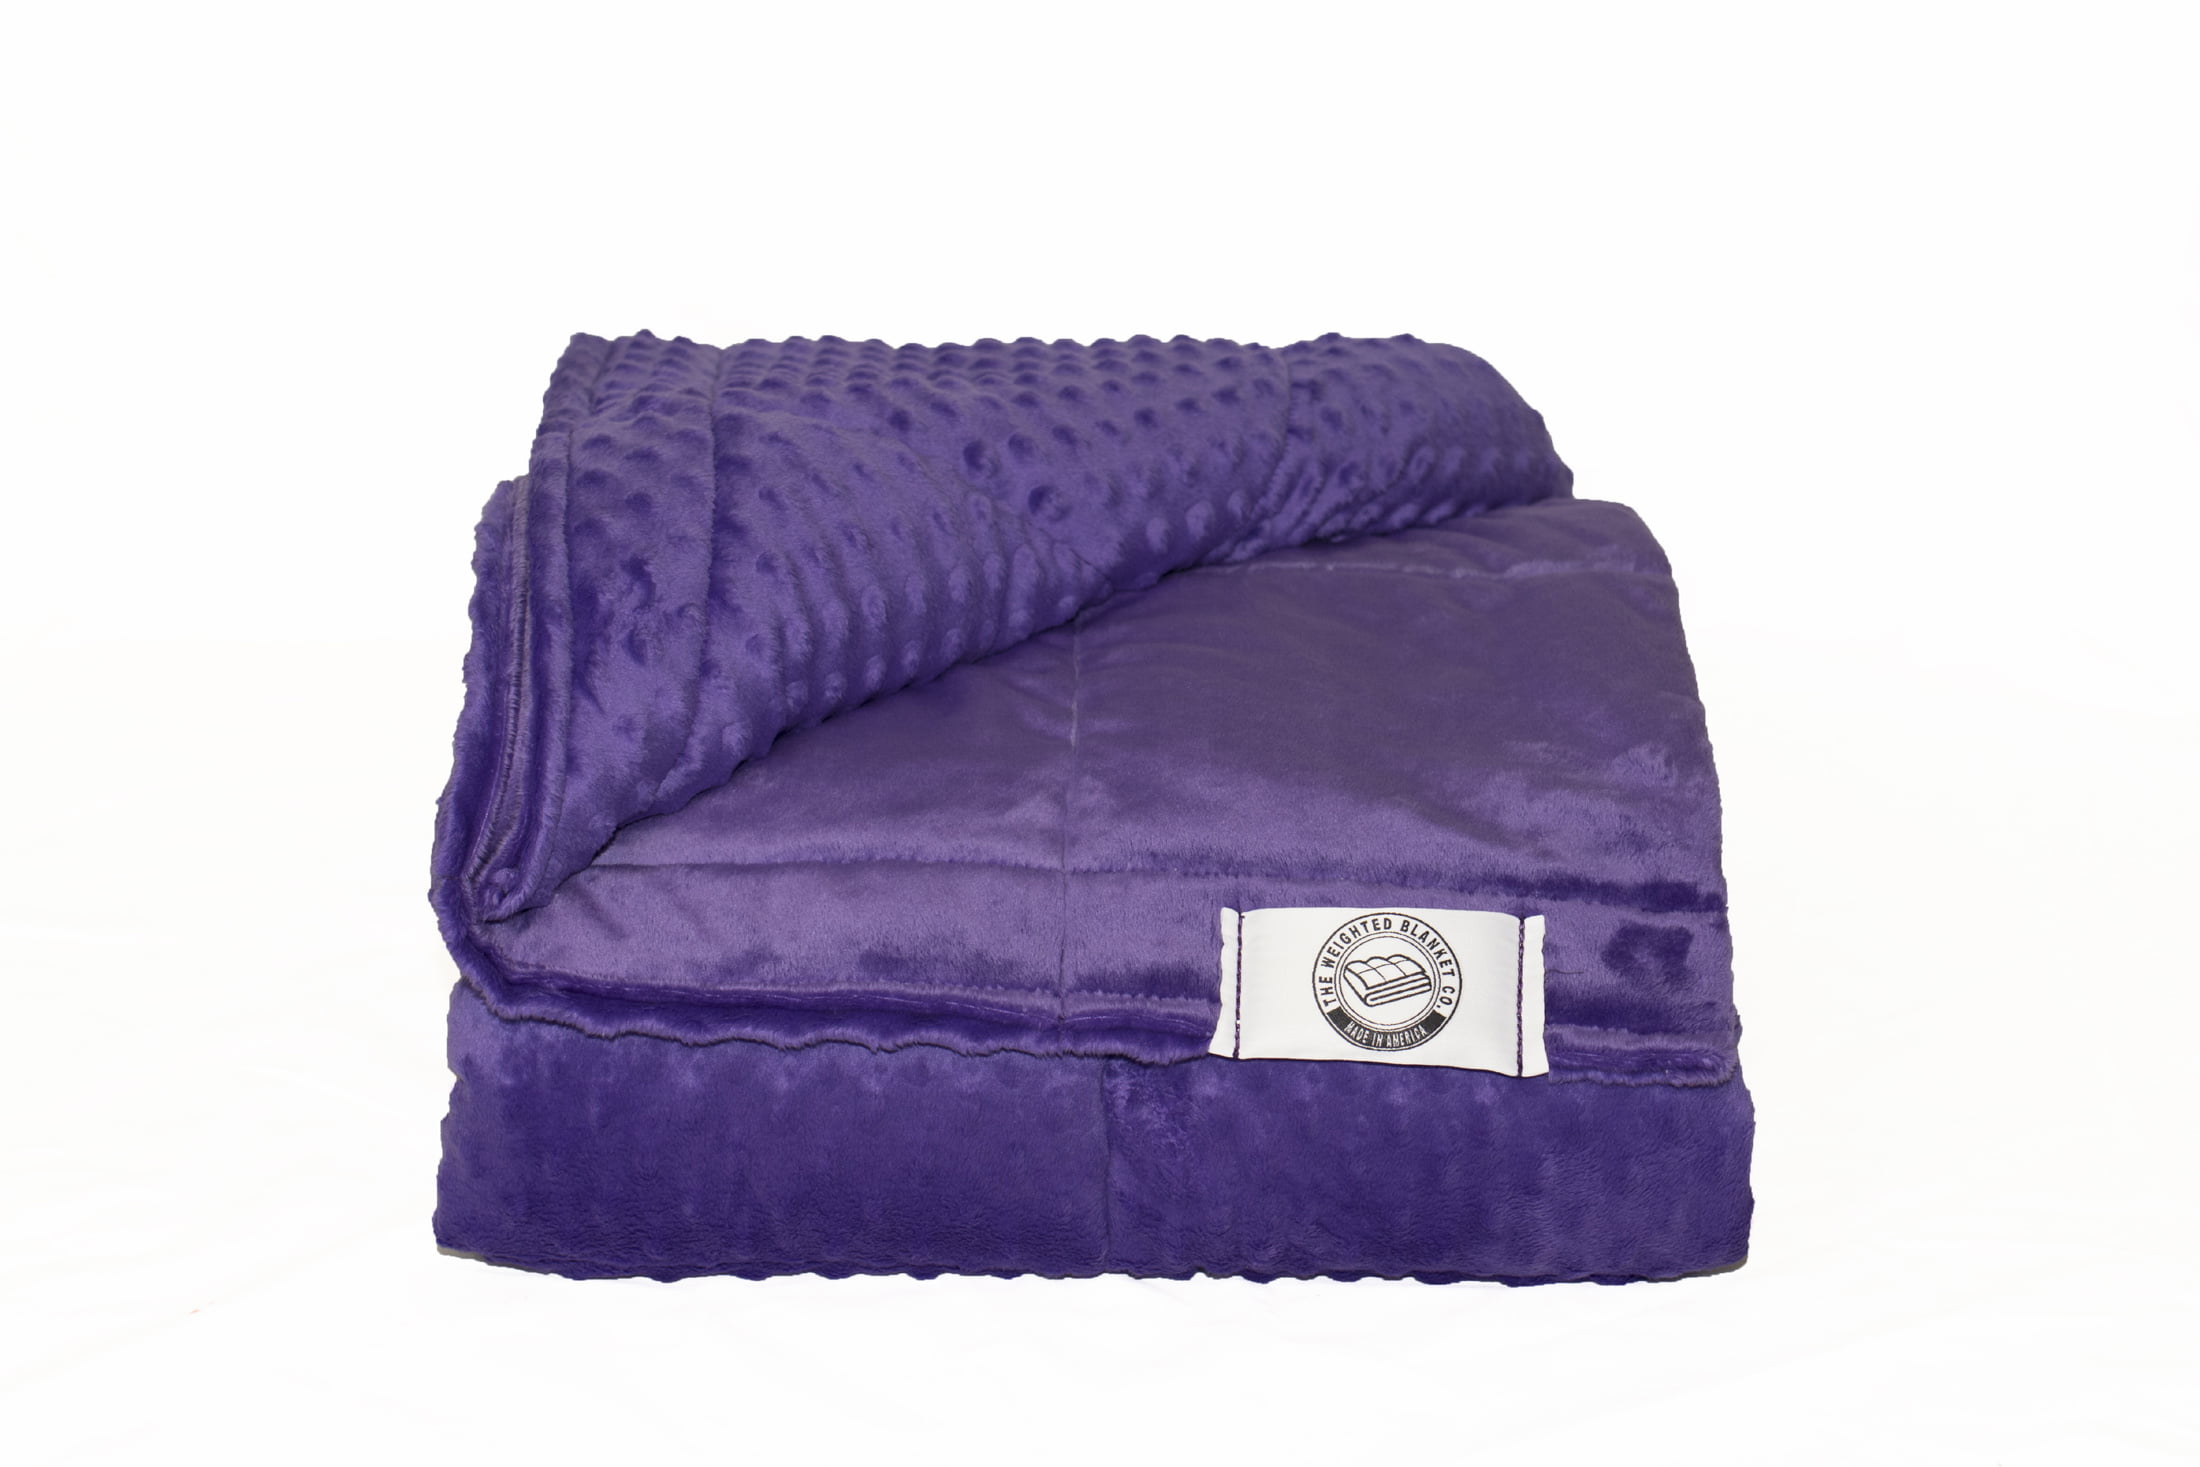 Purple Weighted Blanket - Walmart.com - Walmart.com